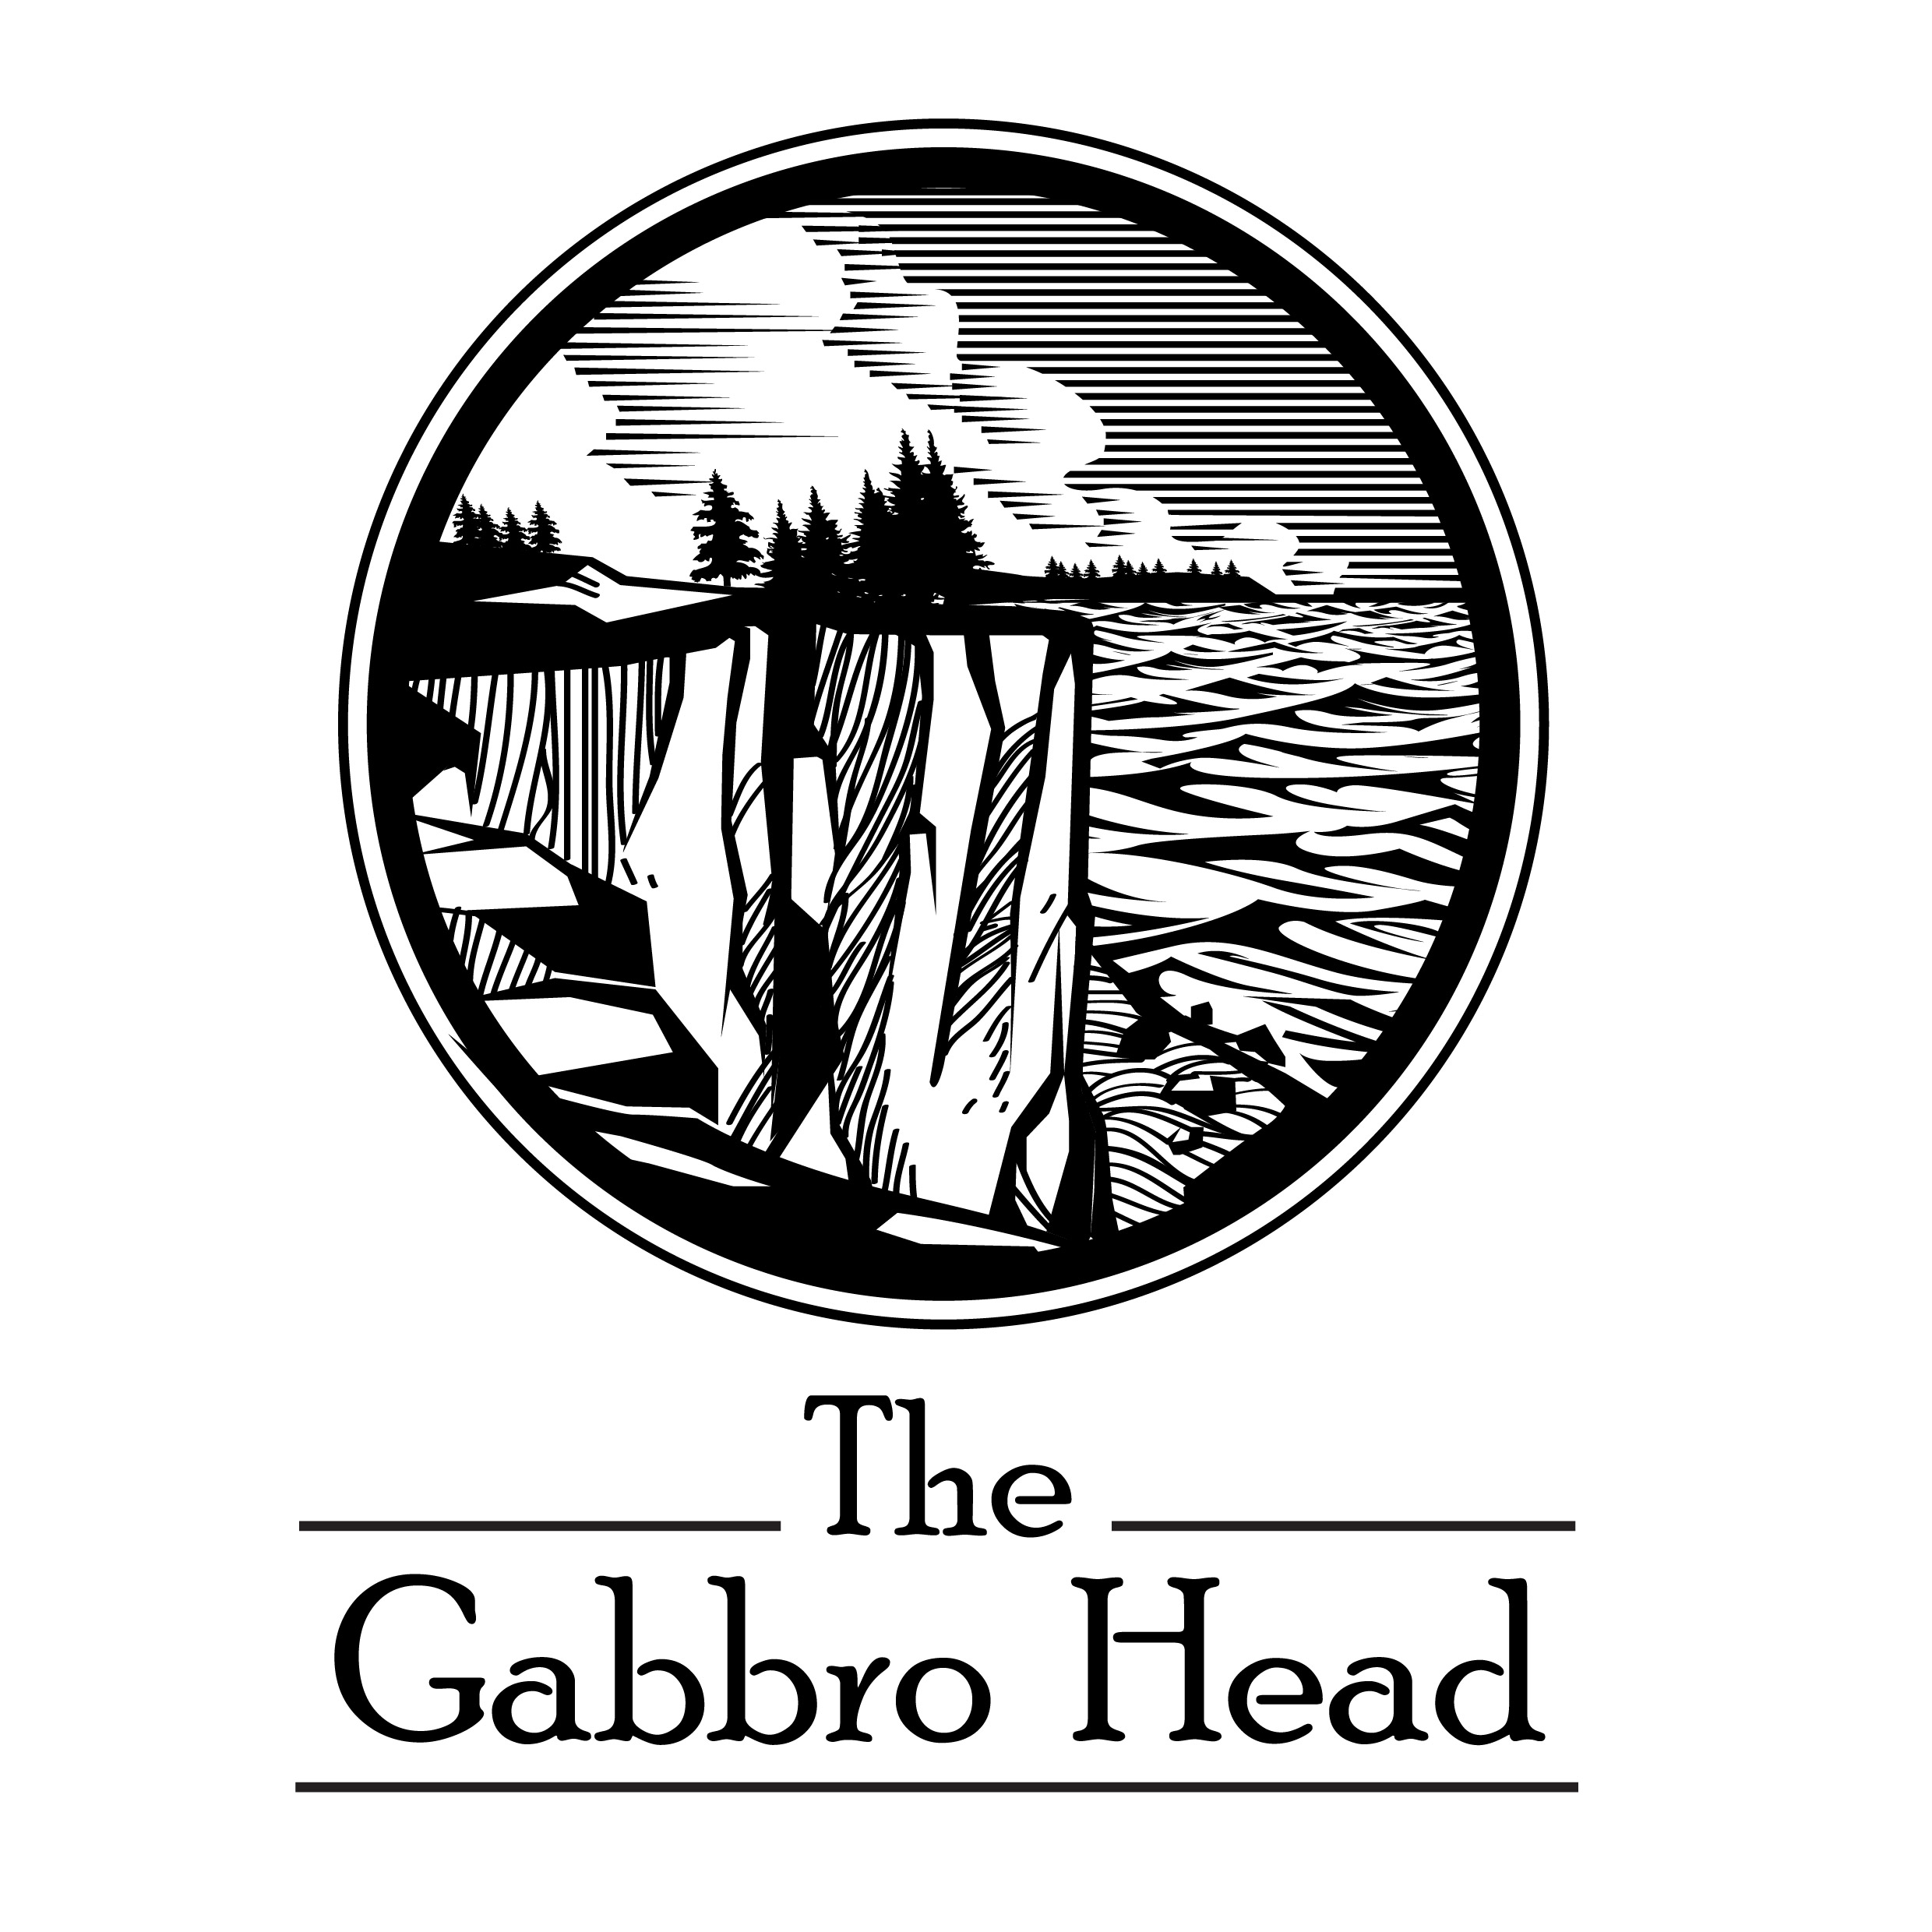 The Gabbro Head Press